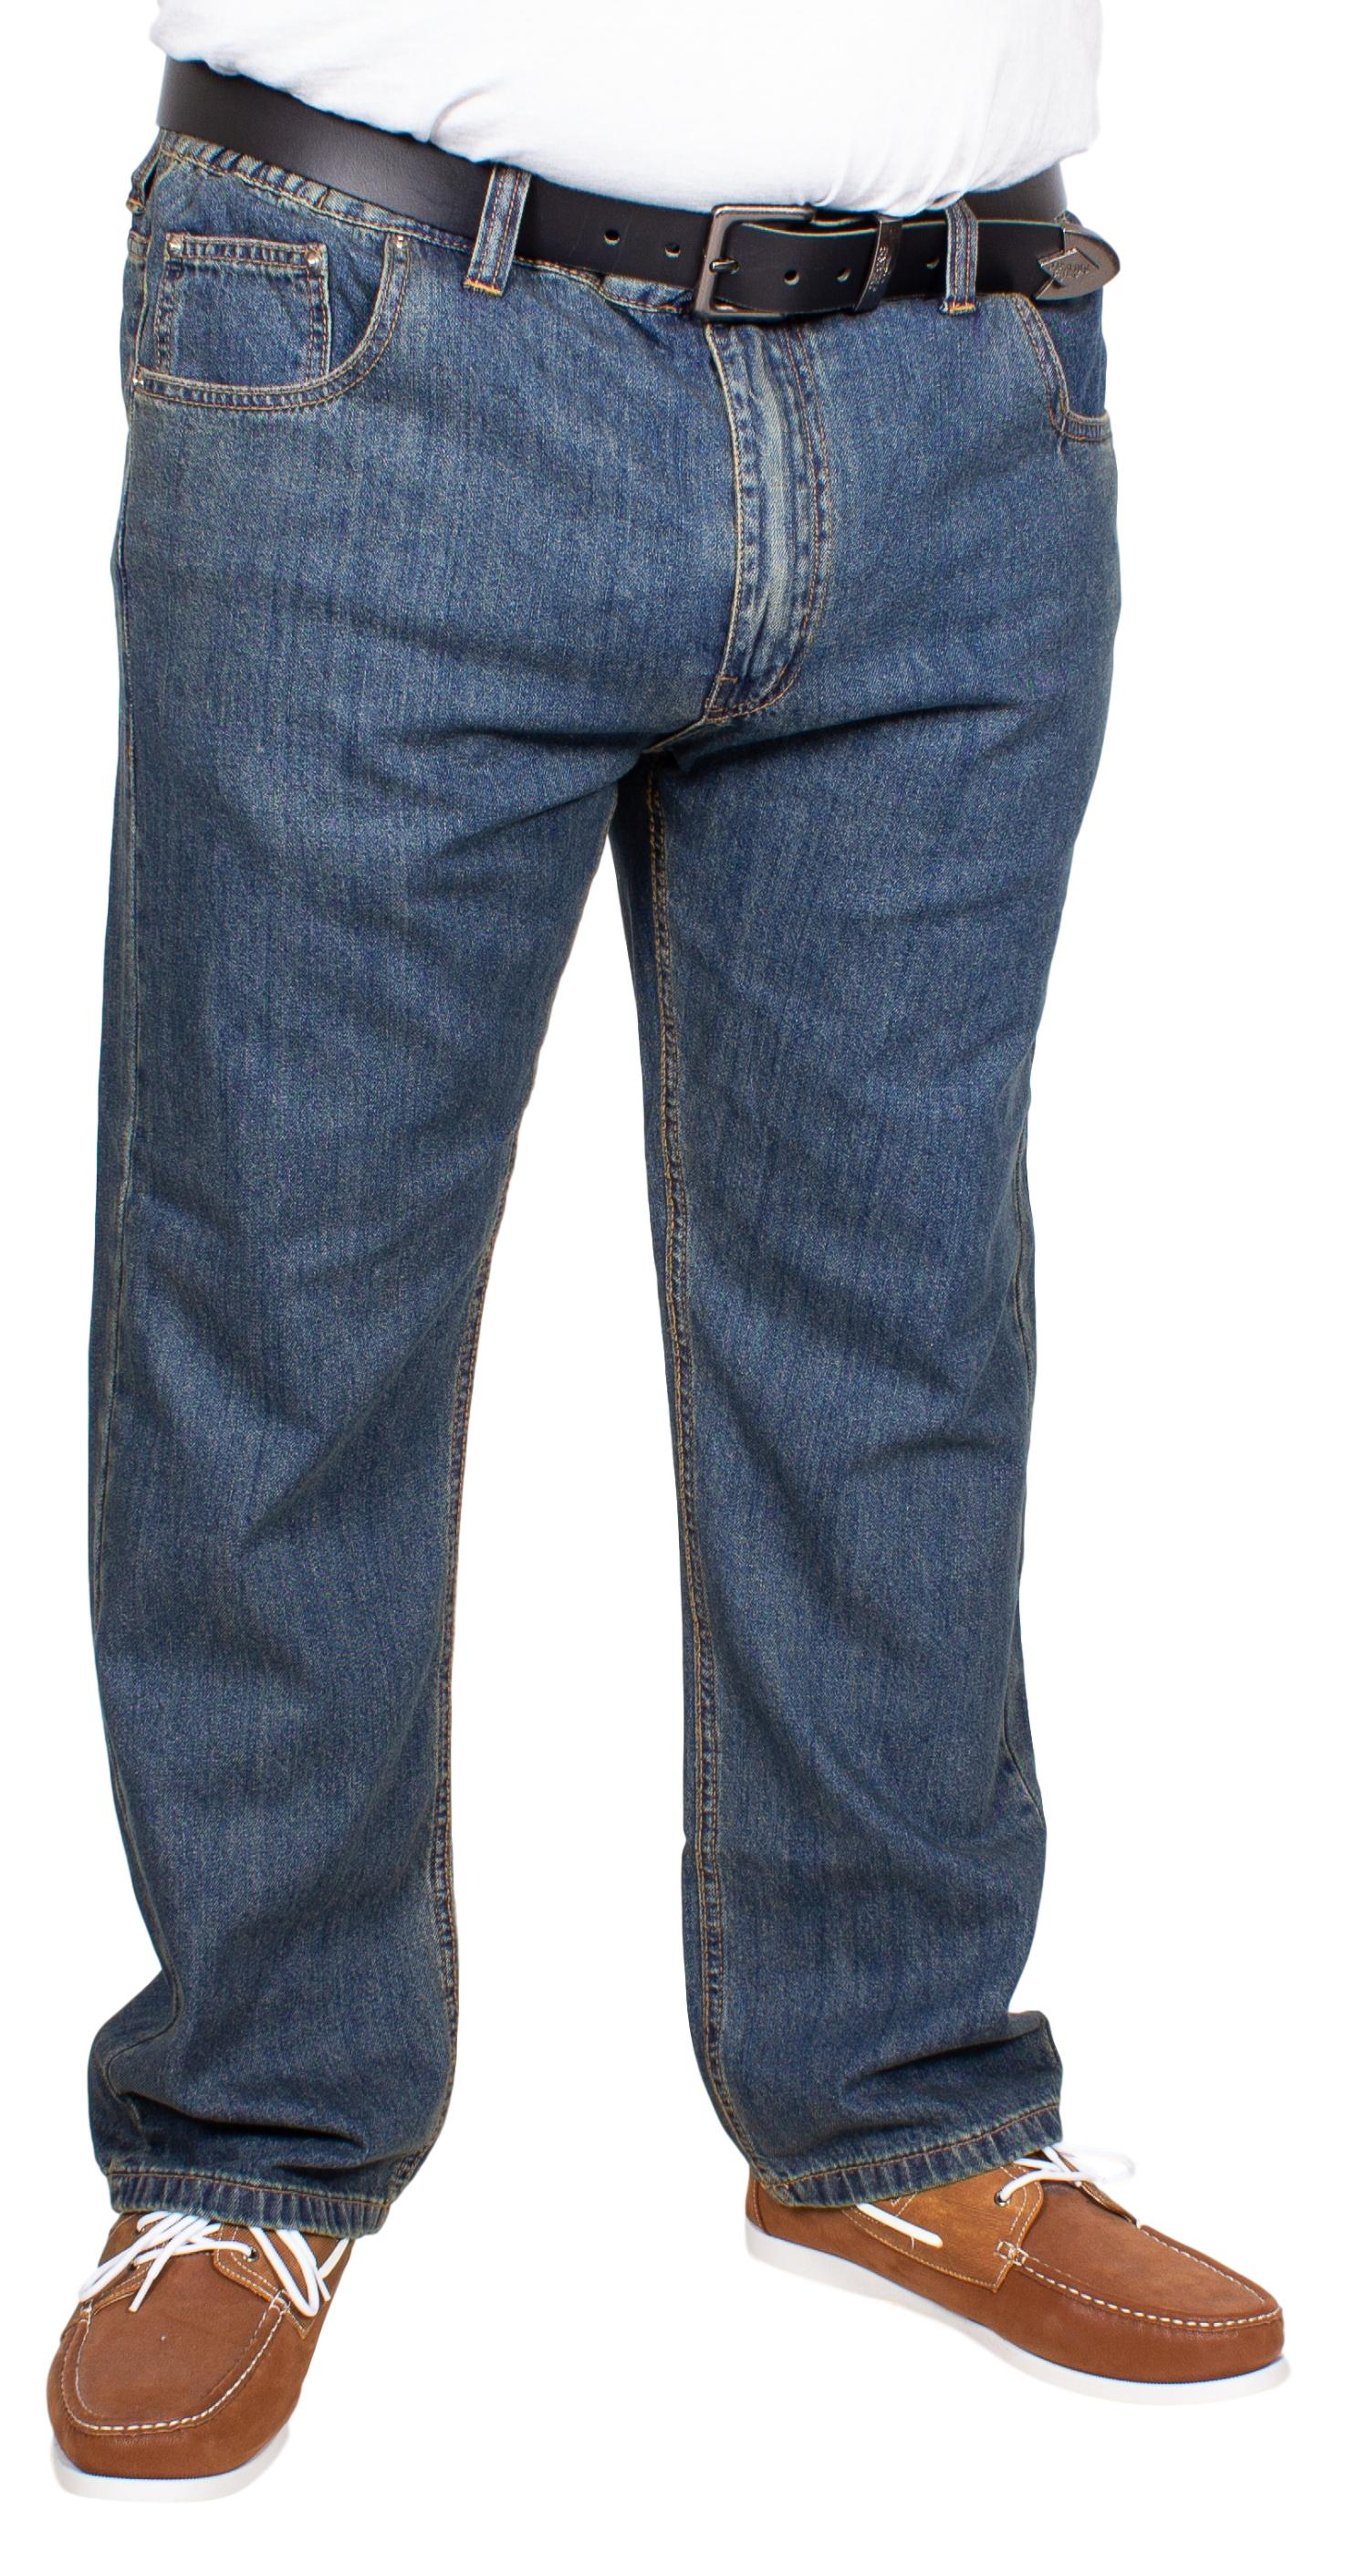 mens jeans elasticated waistband